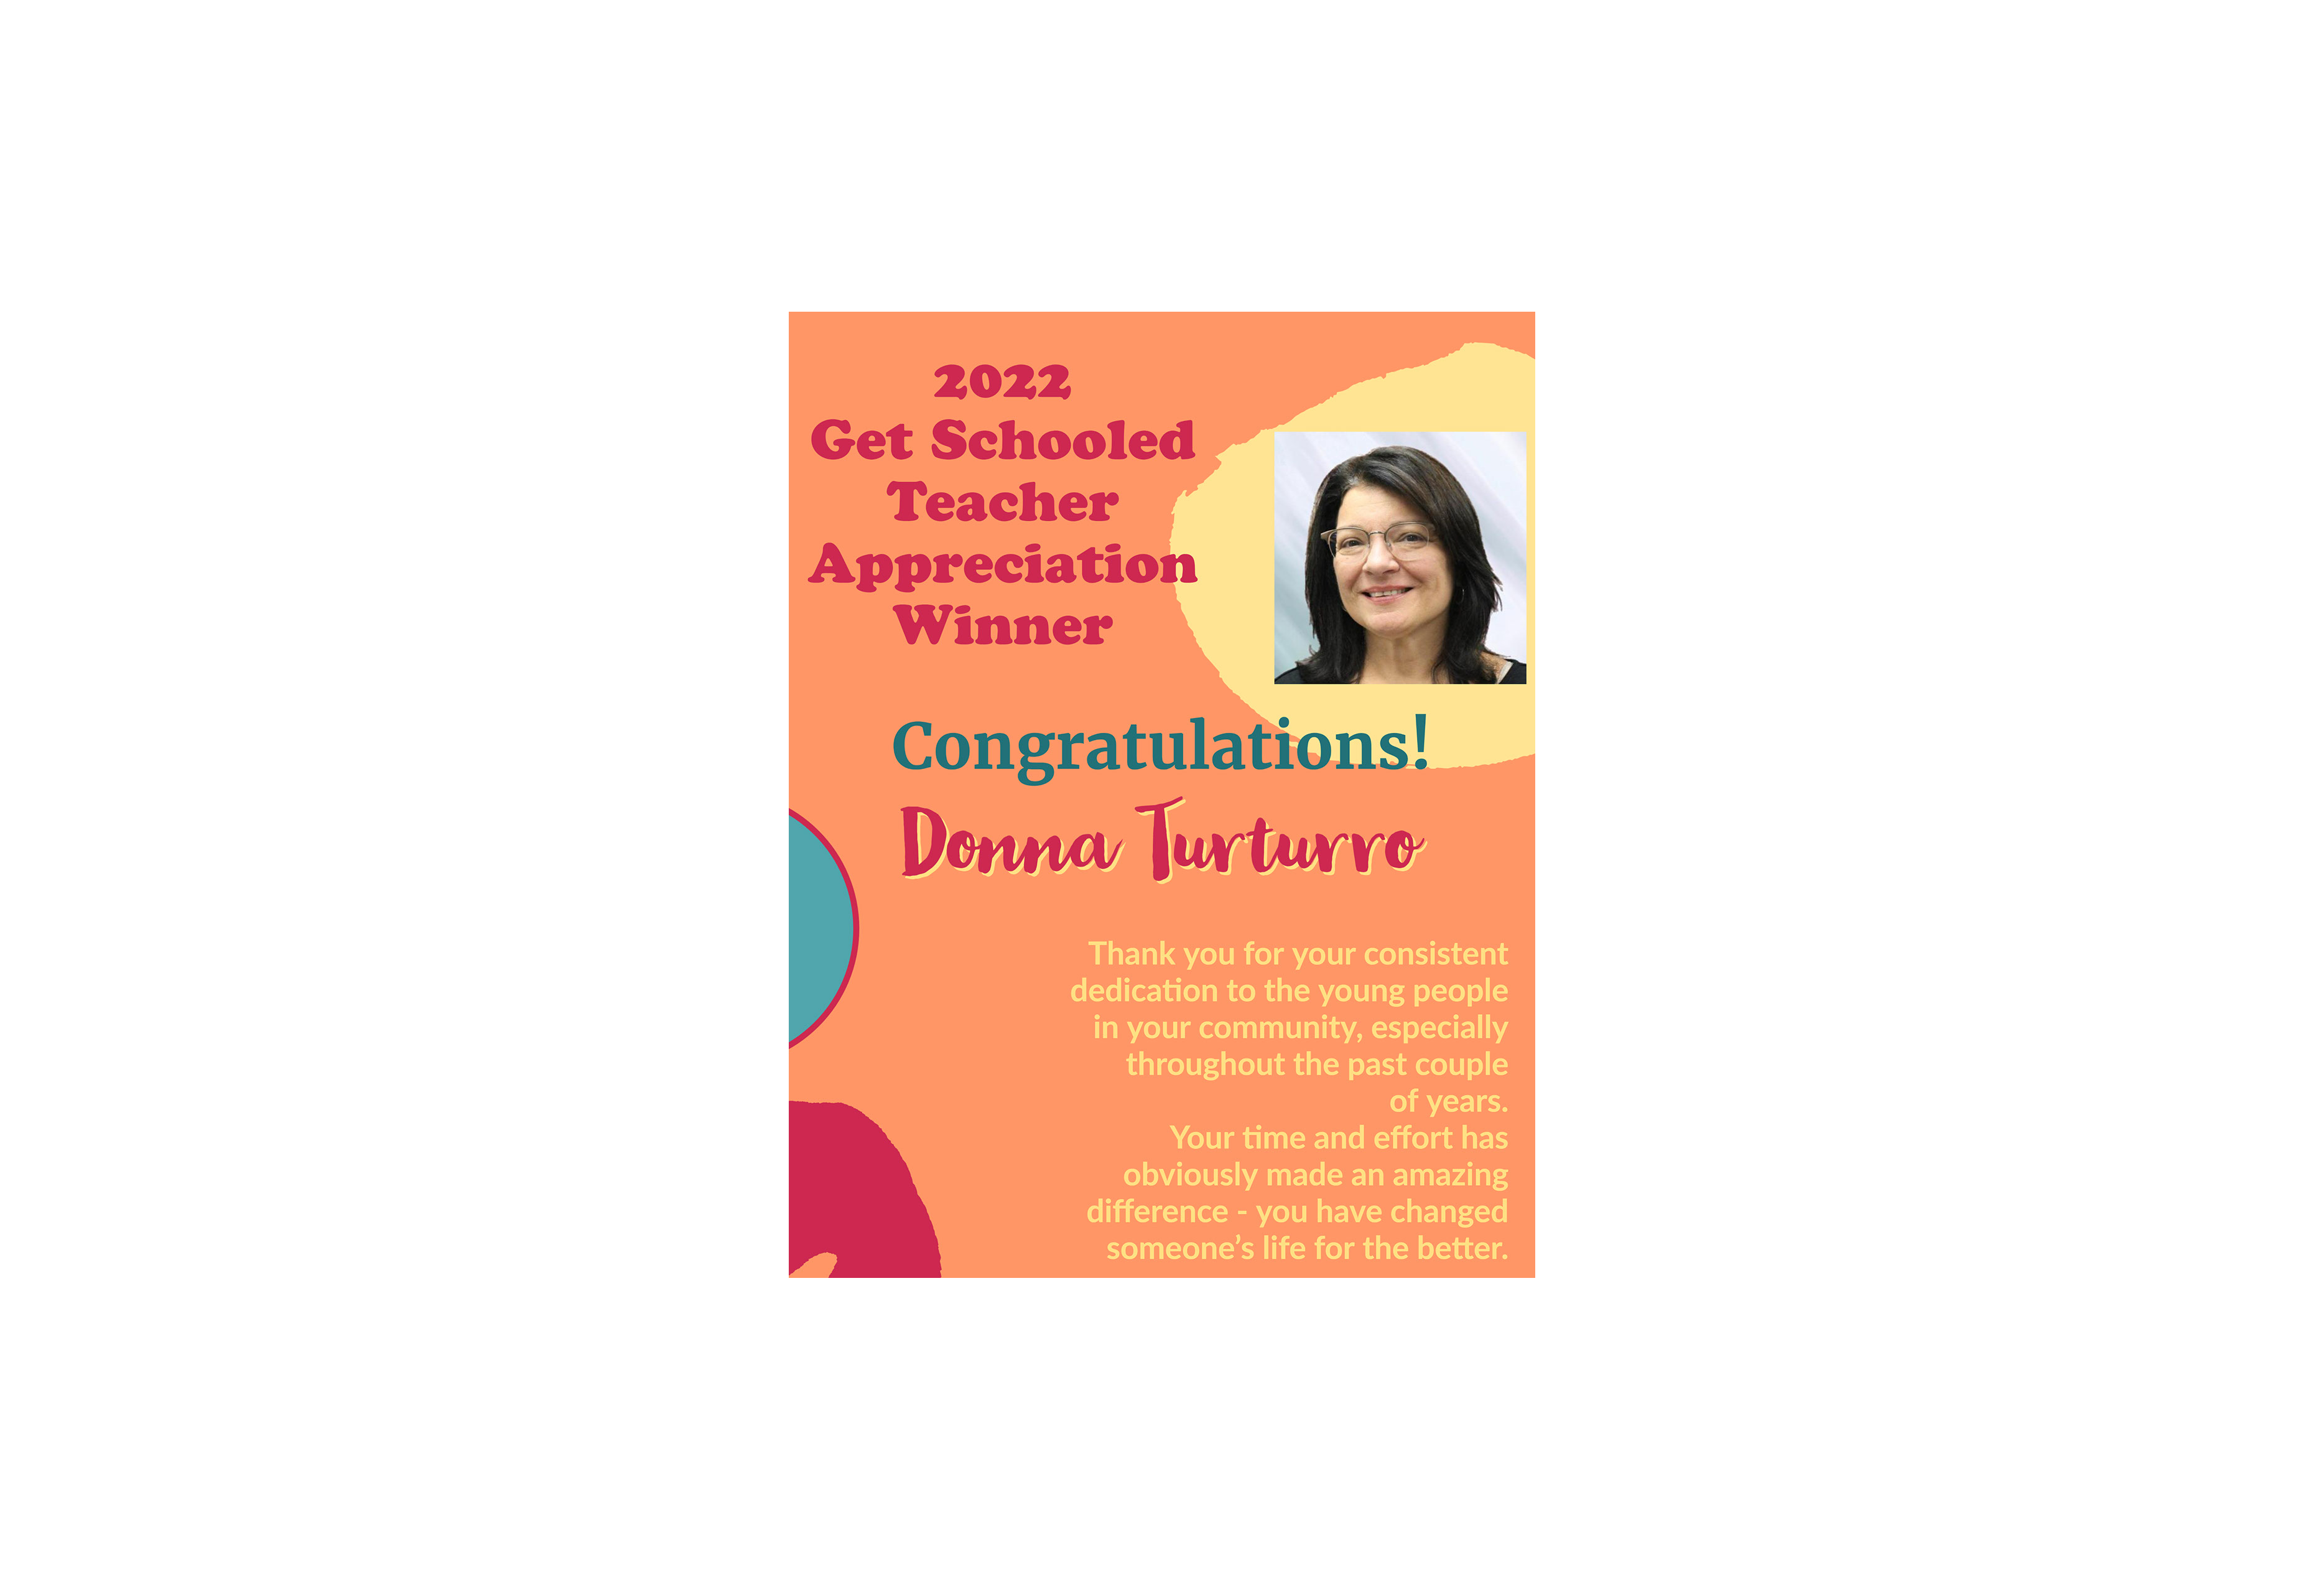 2022 Get Schooled Teacher Appreciation Winner - Congrats Donna Turturro